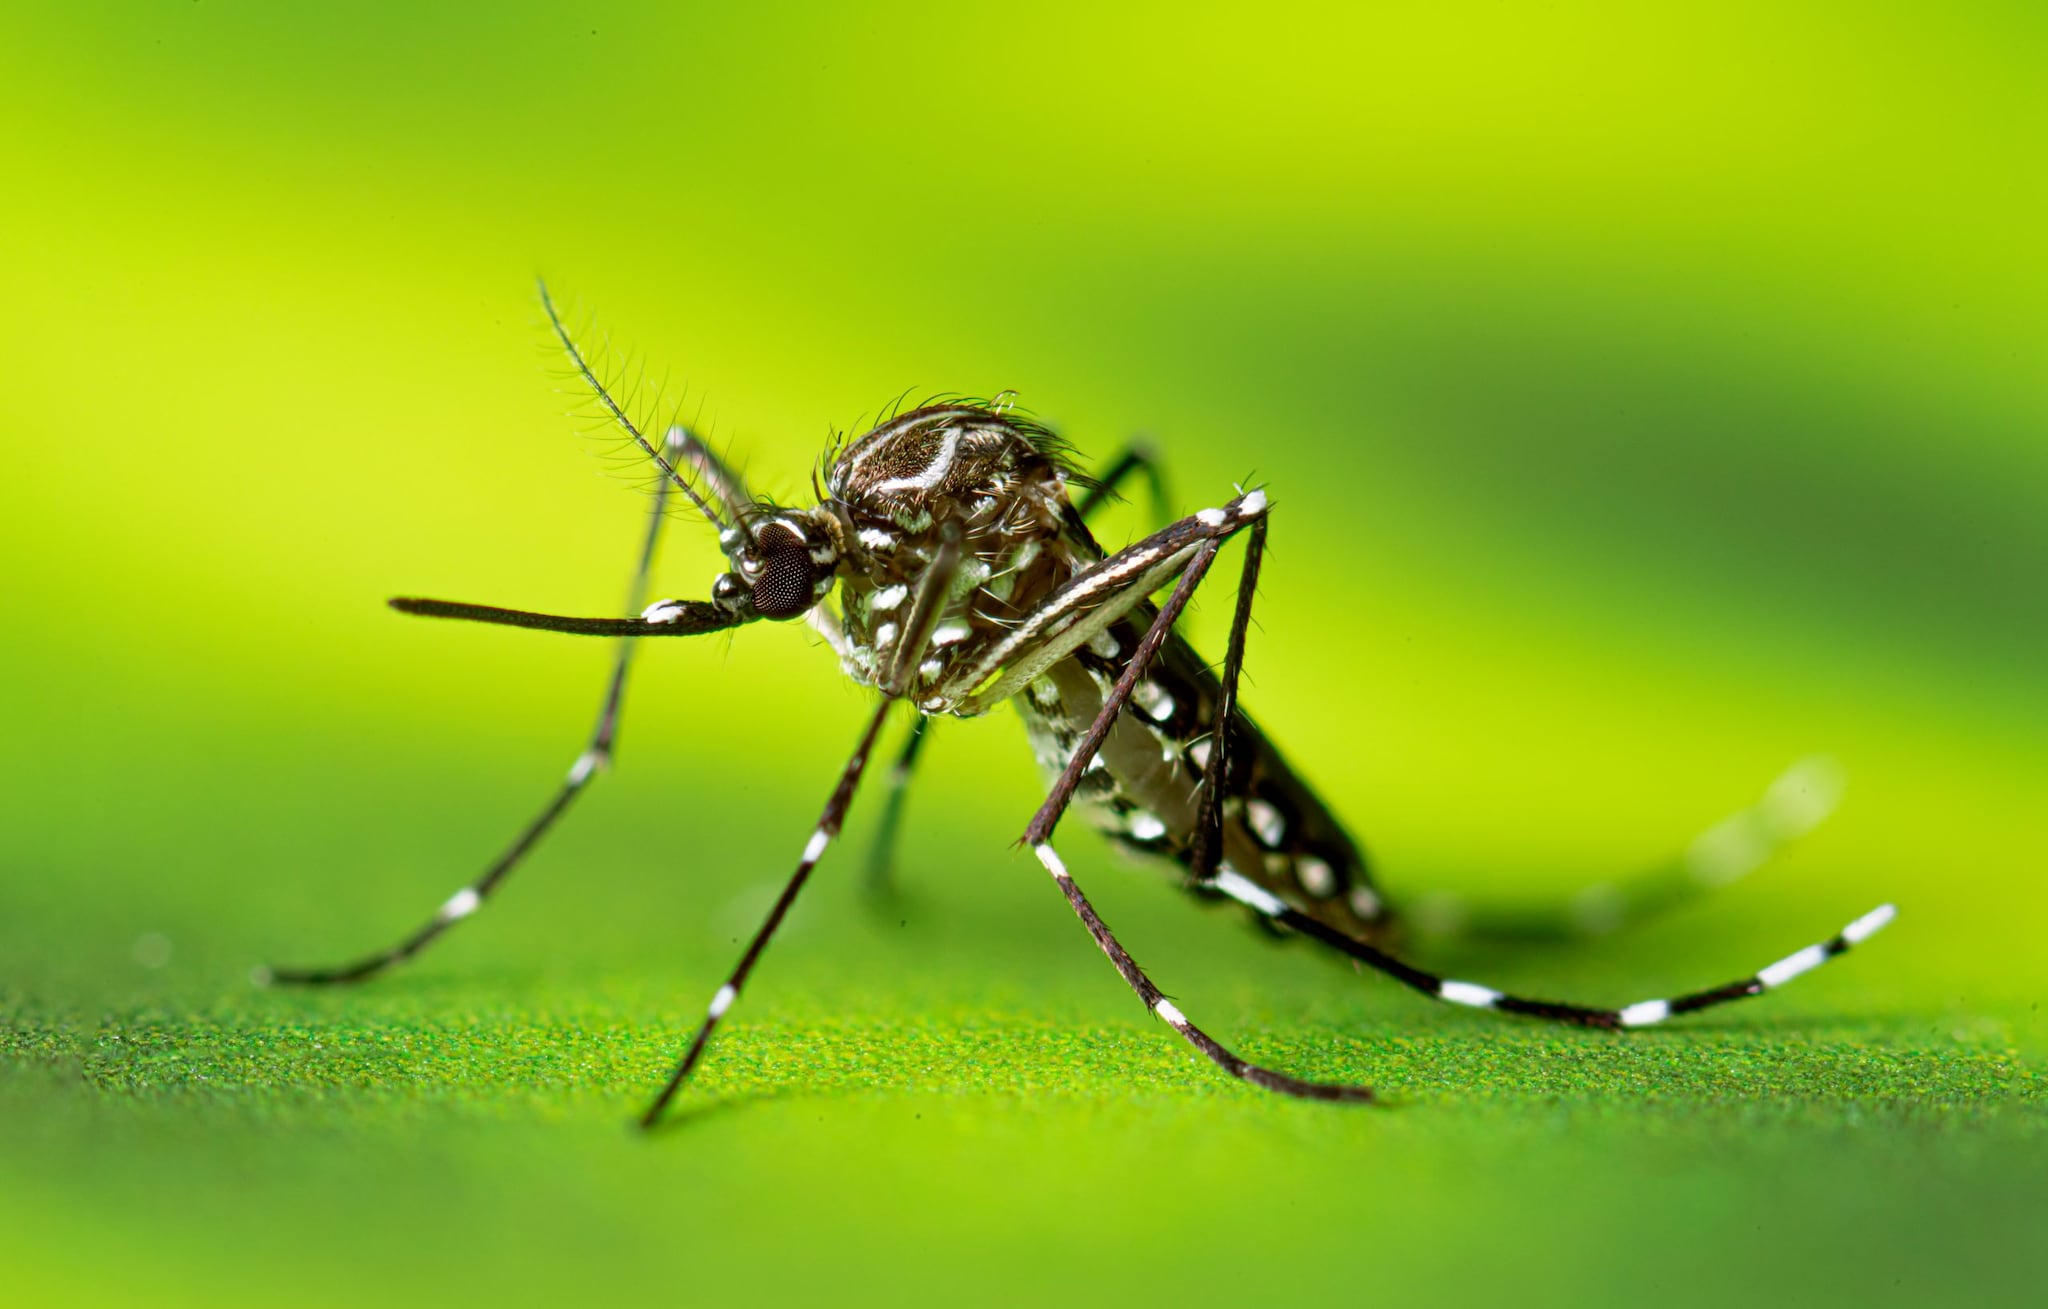 Adult female Aedes aegypti mosquito resting